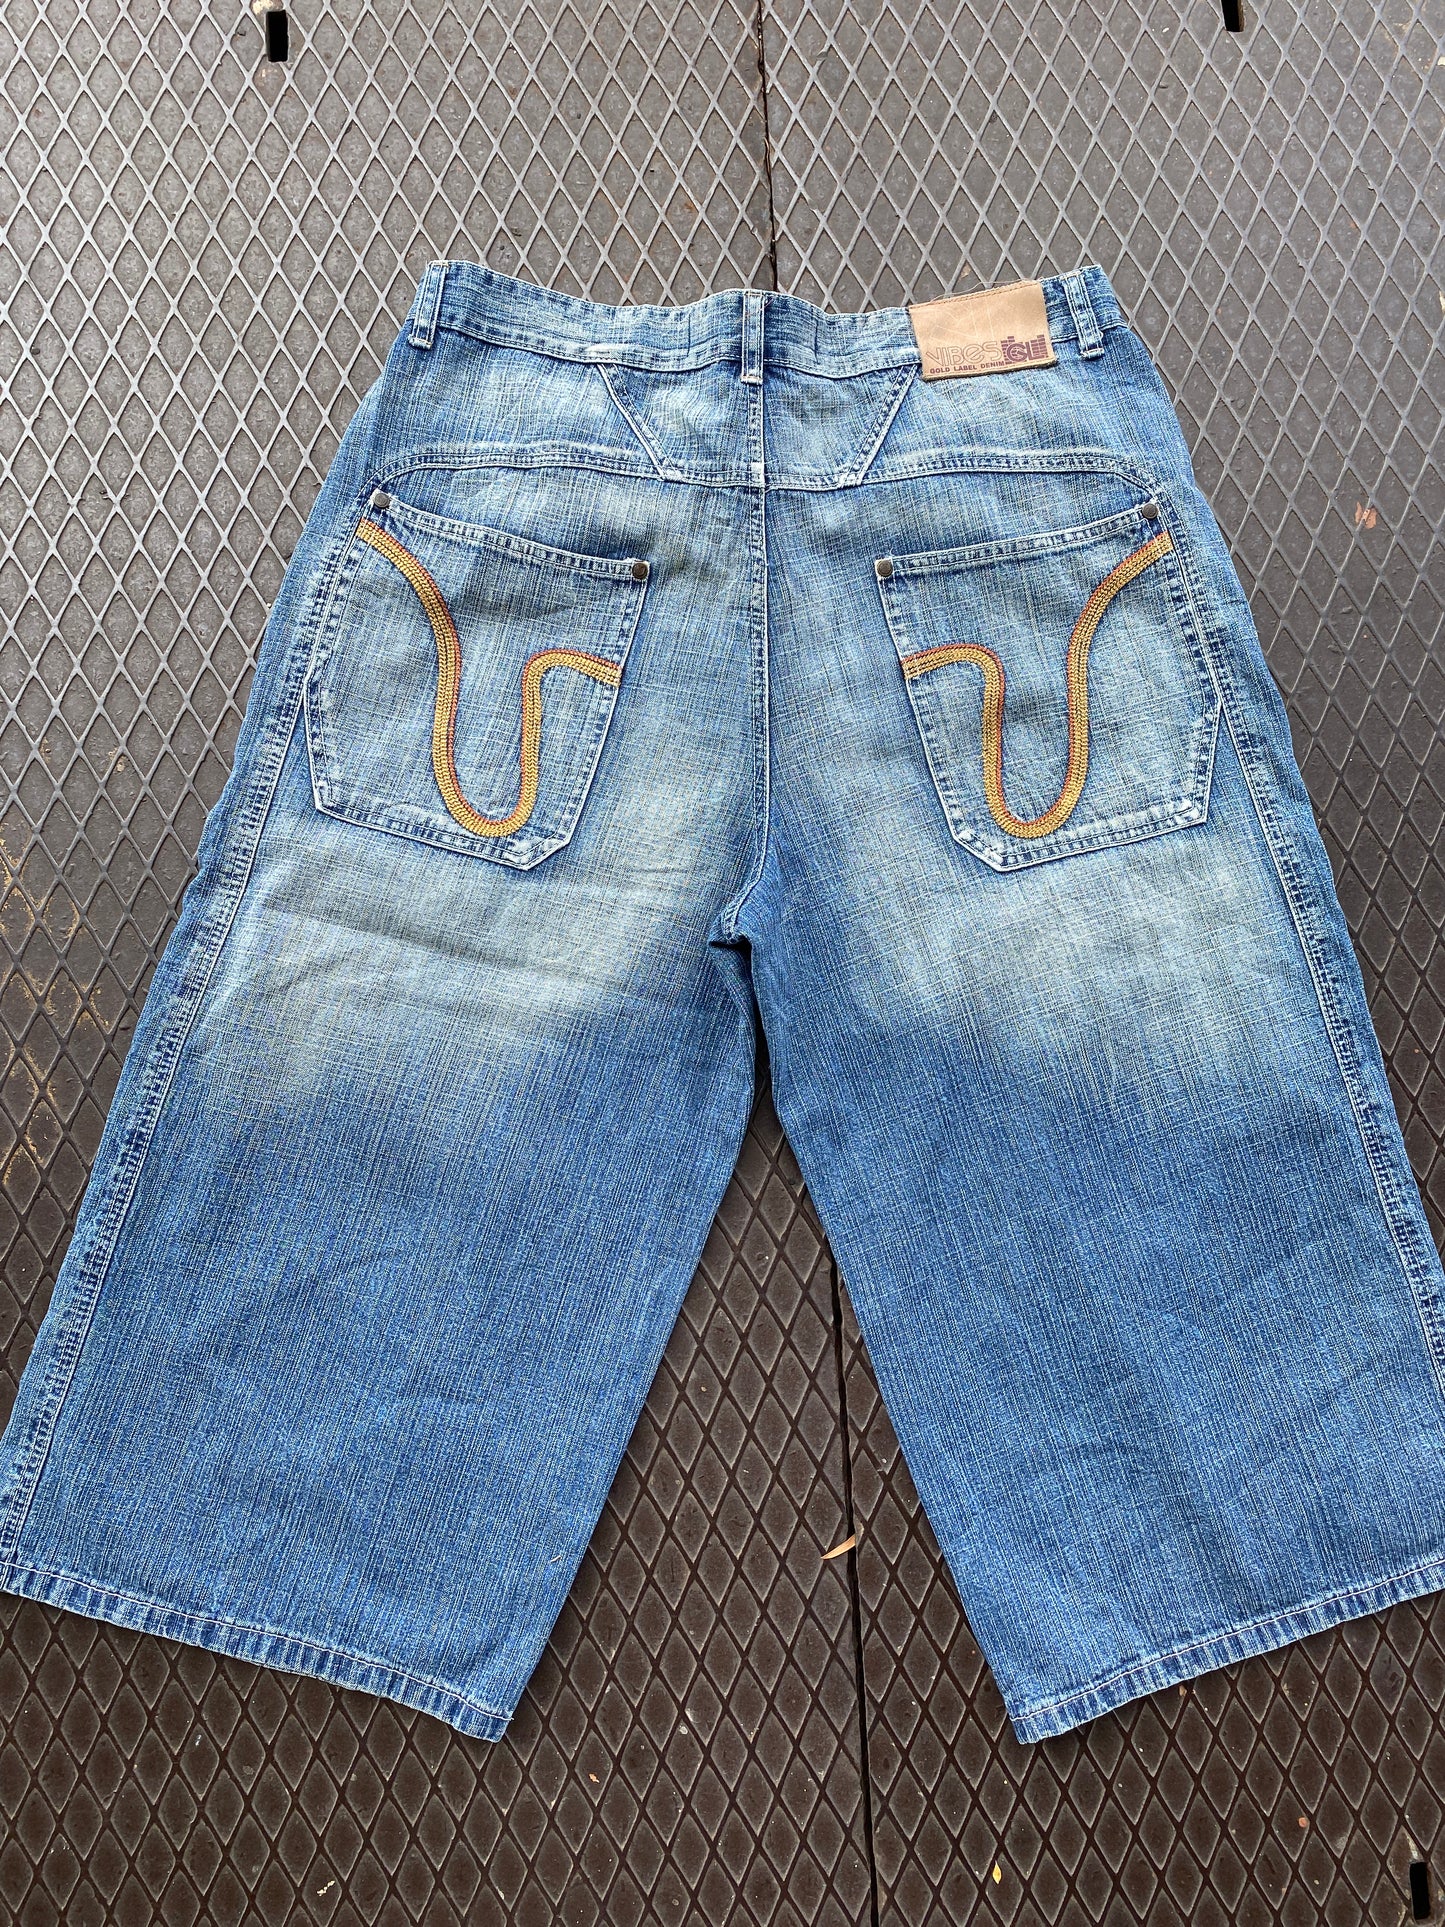 38 - Vibes GL Denim Embroidered Pockets Shorts